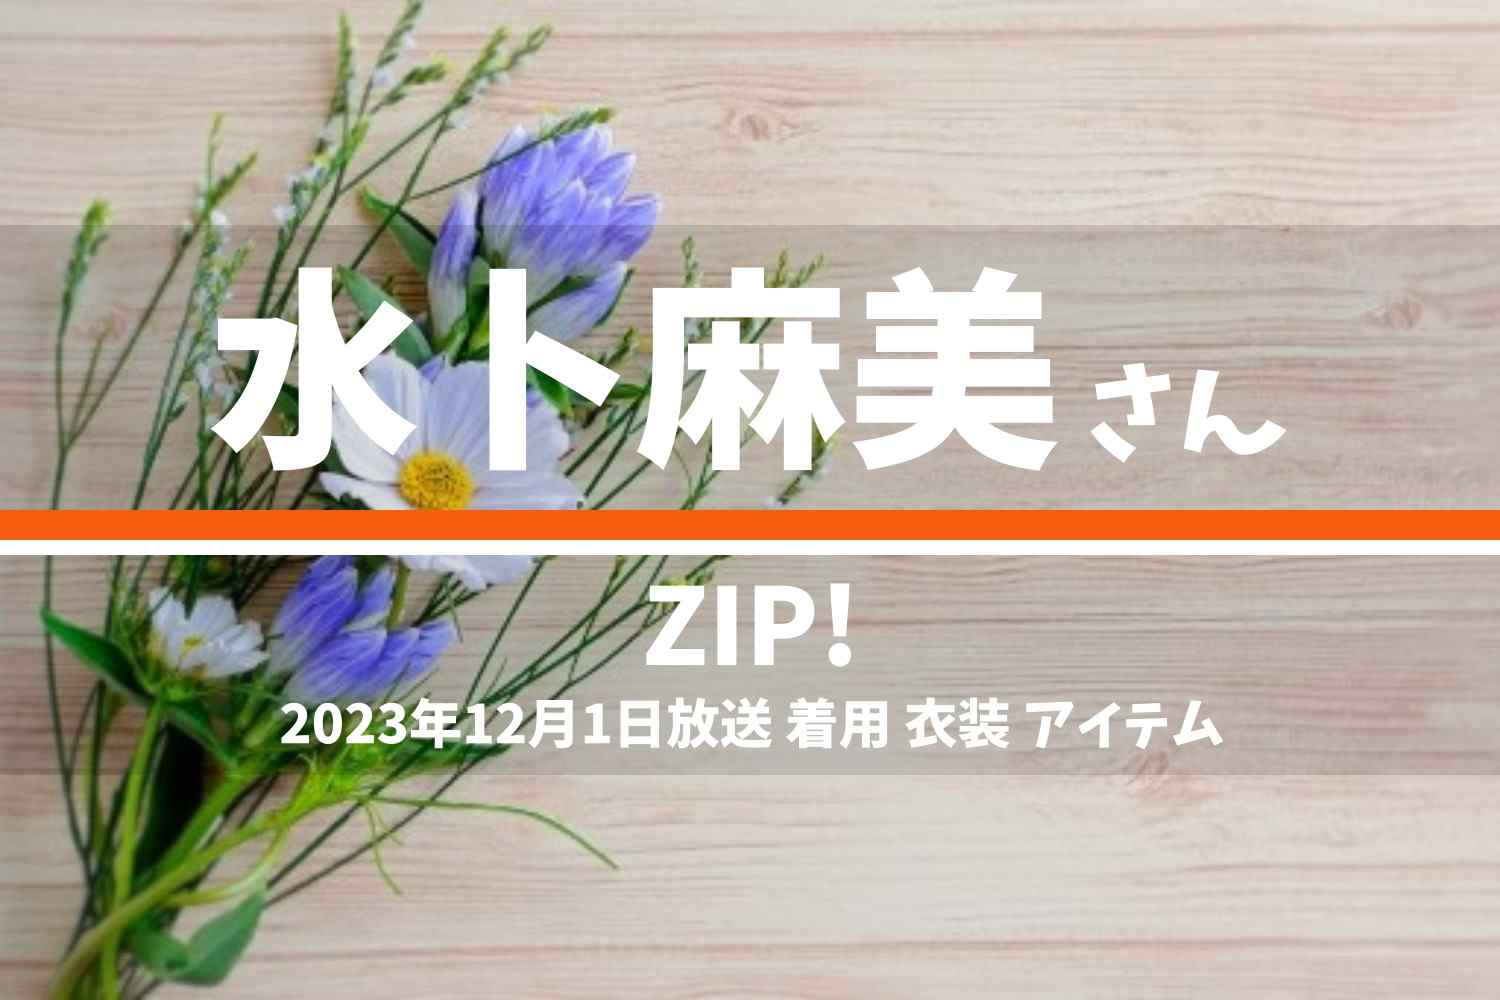 ZIP! 水卜麻美さん 番組 衣装 2023年12月1日放送